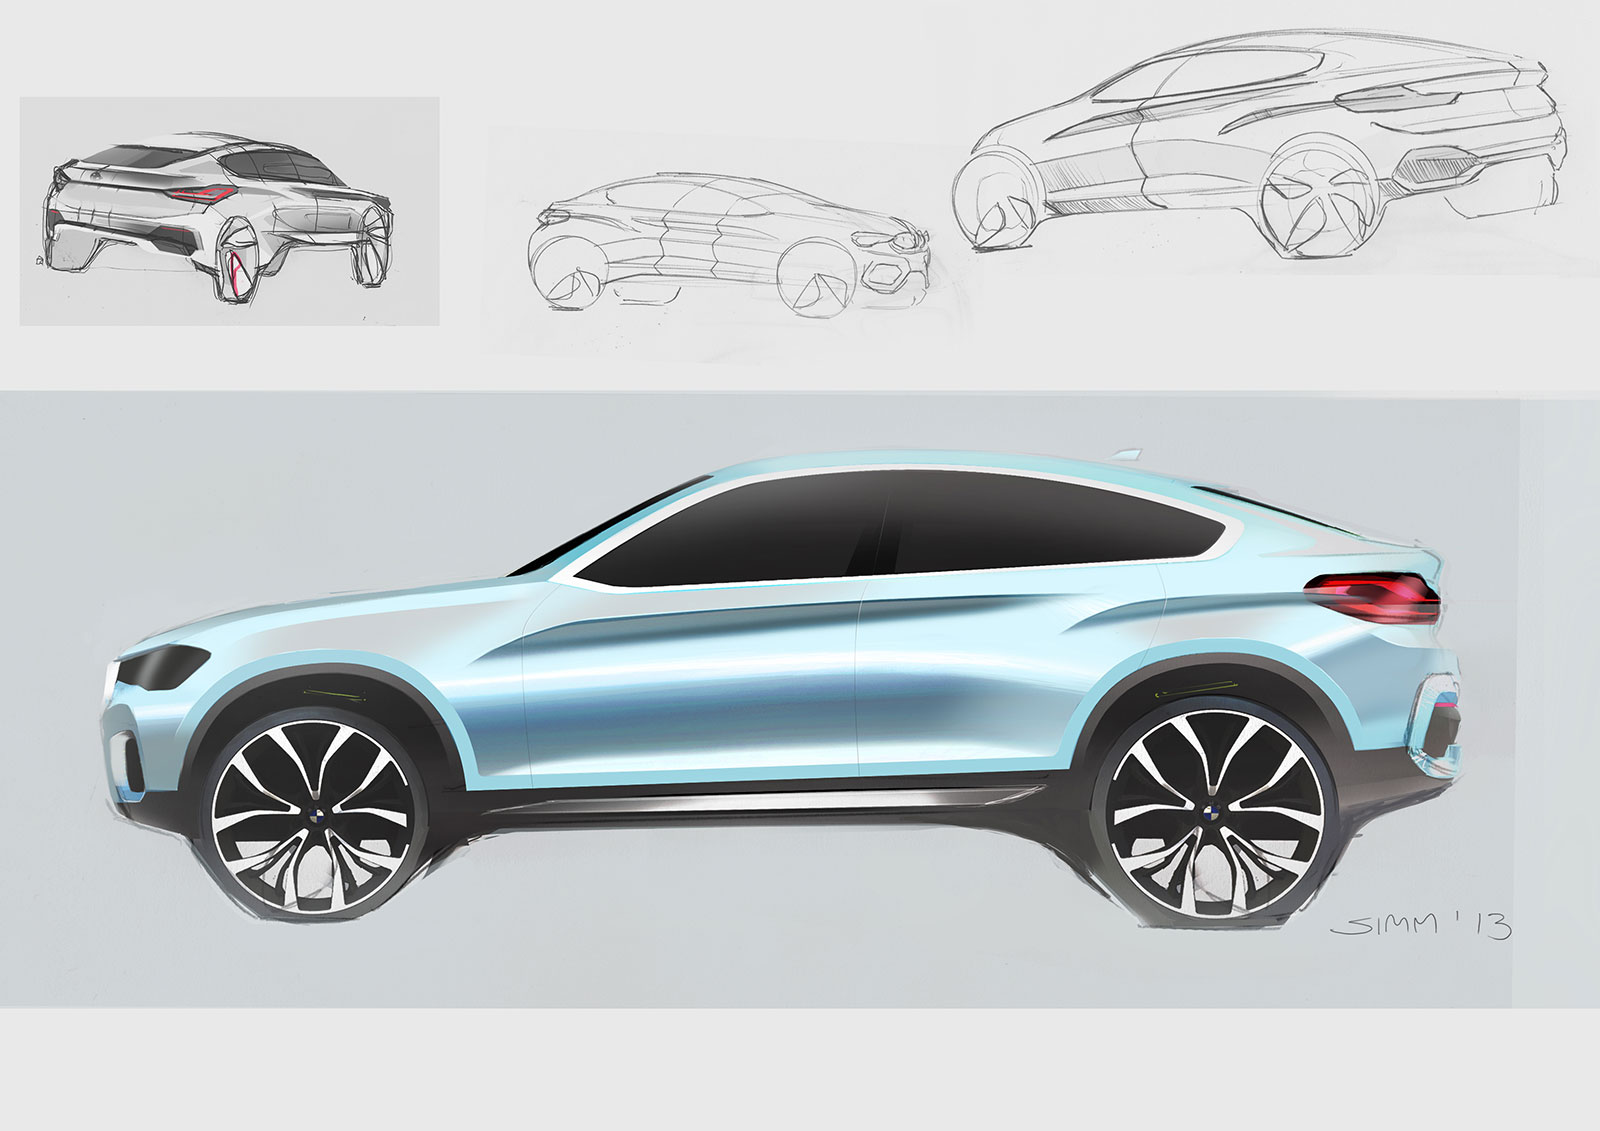 BMW Concept X4, 2013 - Design Sketches